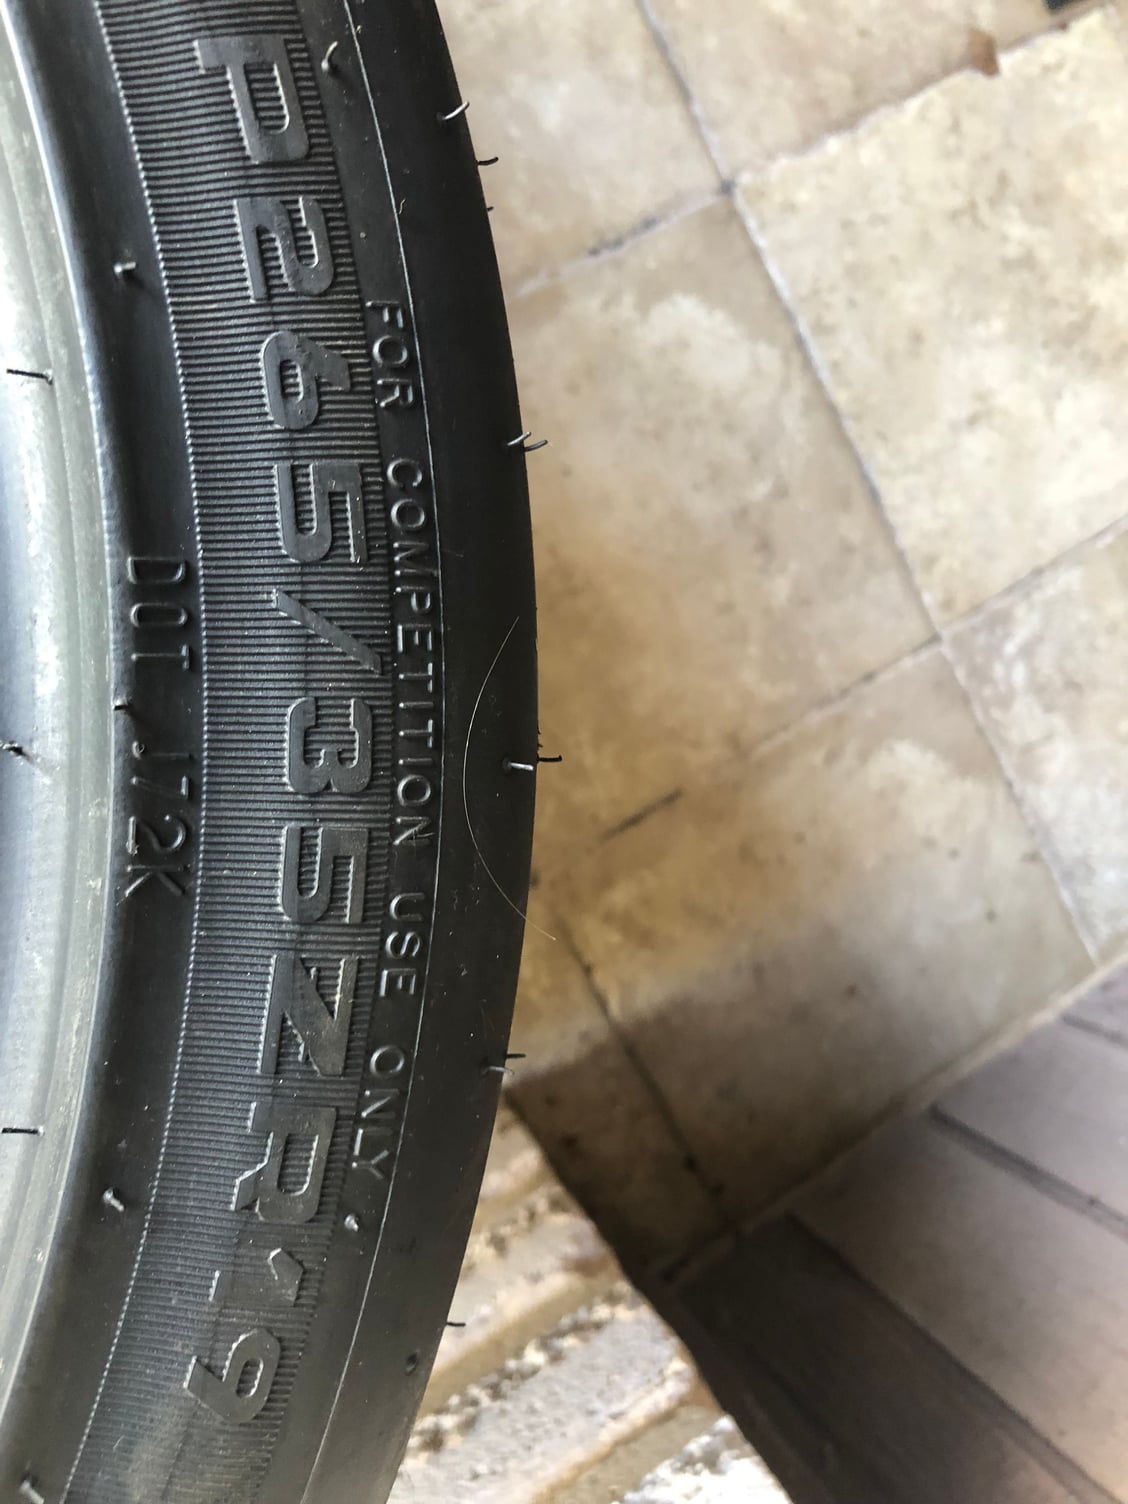 hoosier heat tires r7 cycled fs rennlist expired wheels